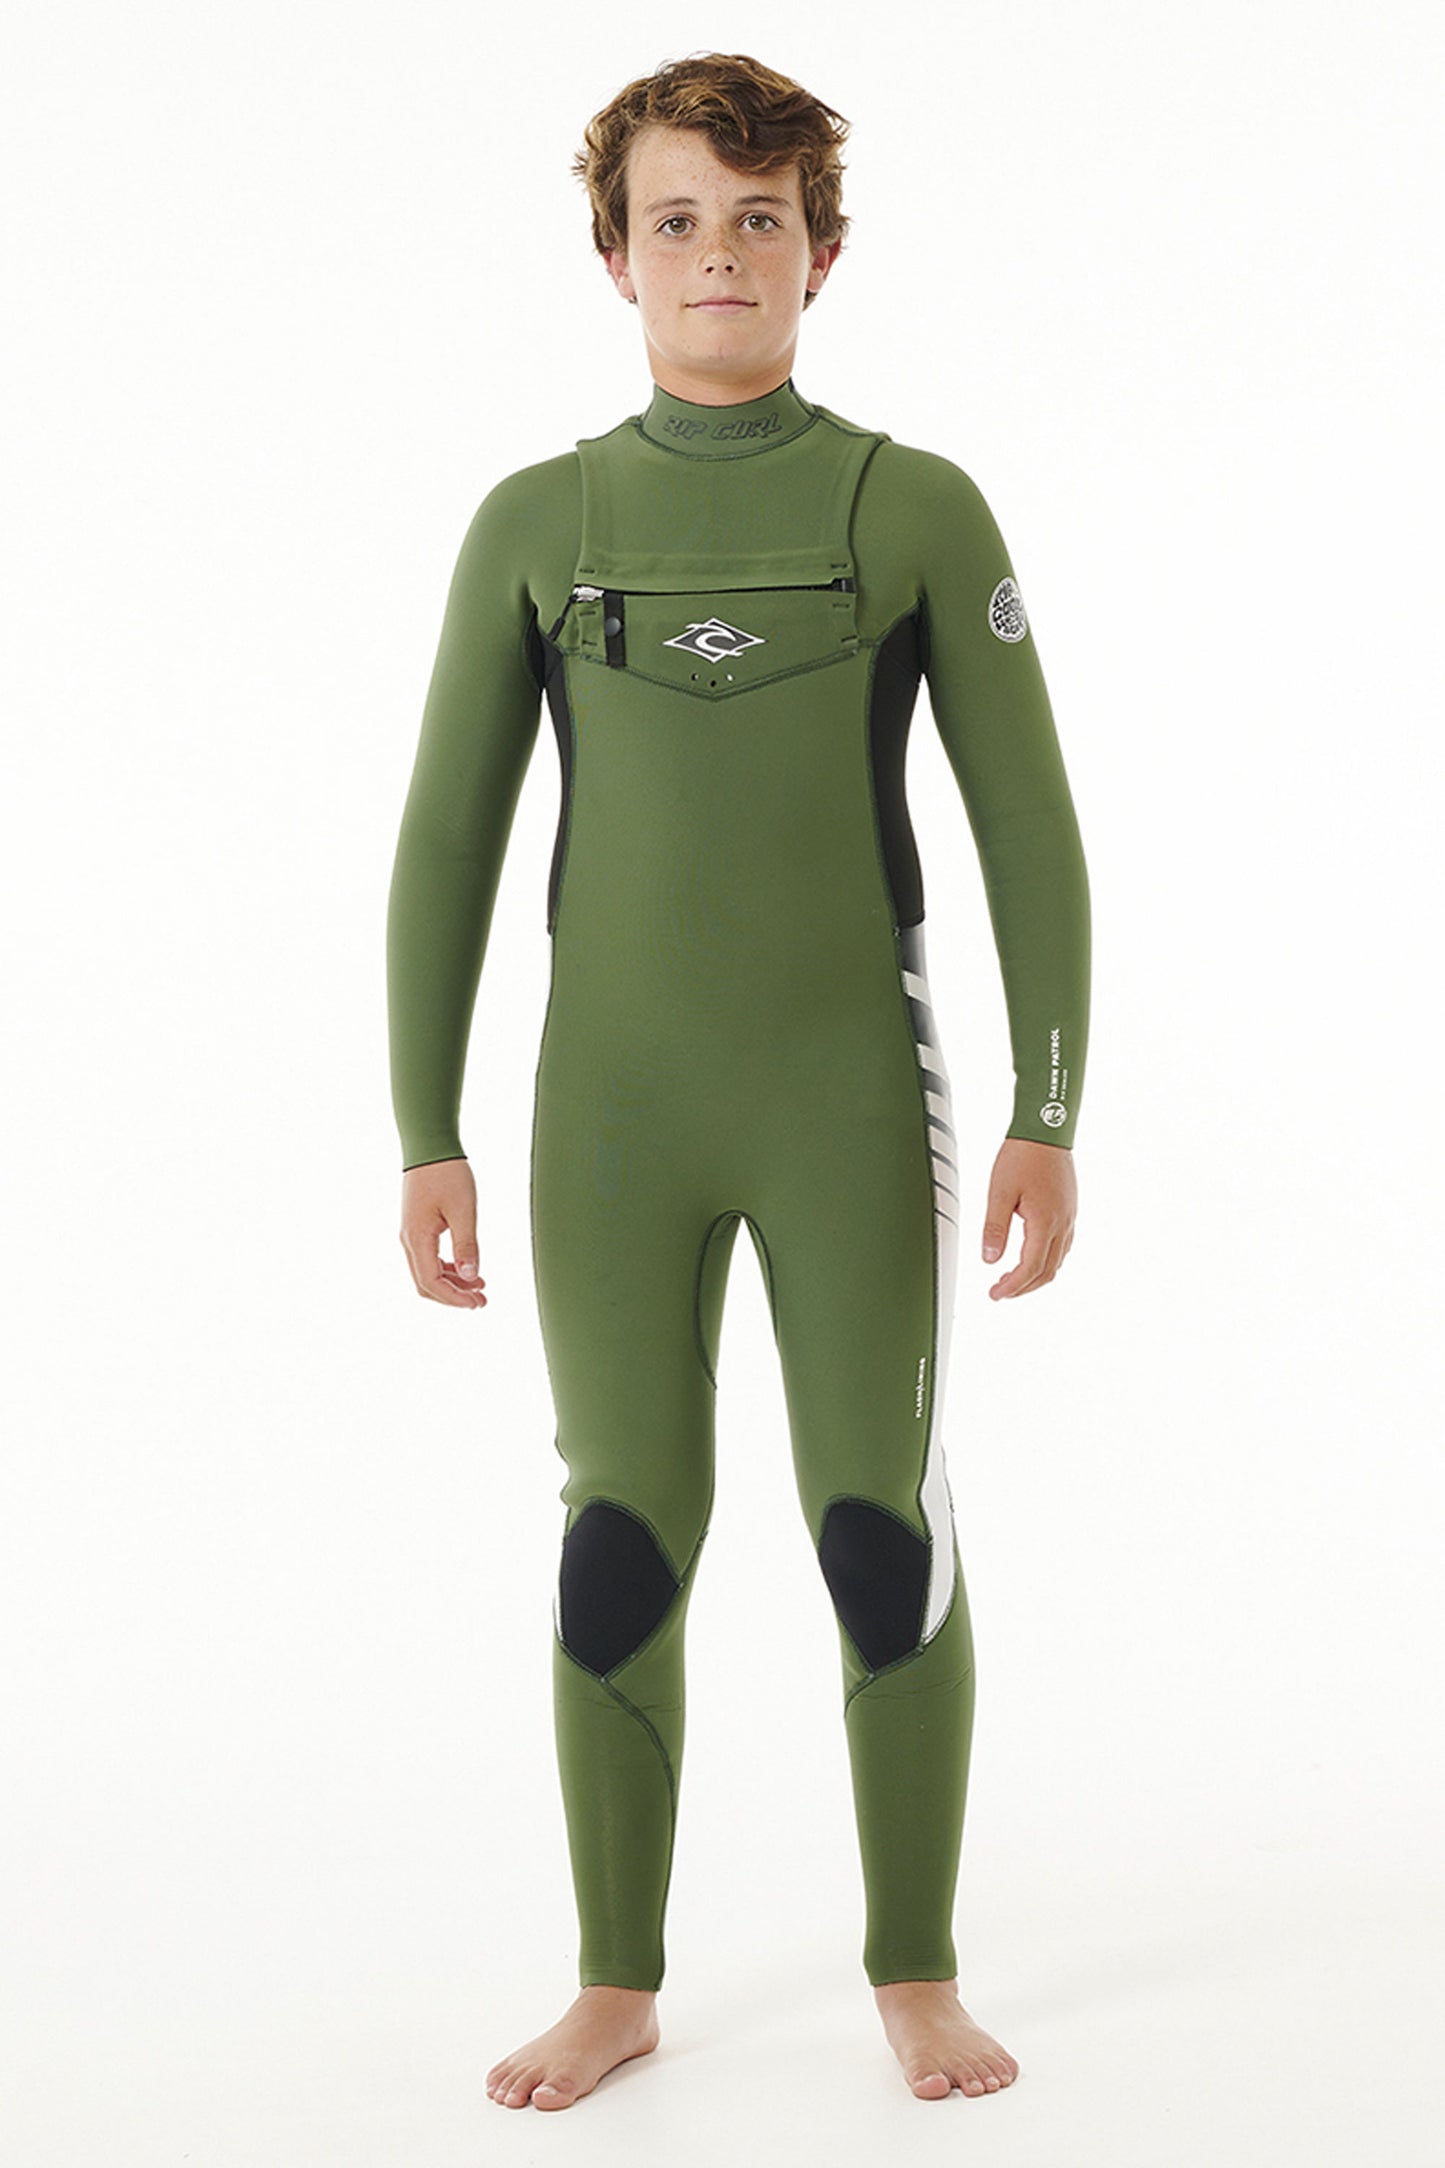 Pukas-Surf-Shop-Rip-Curl-wetsuit-junior-dawn-patrol-4-3-chest-zip-green